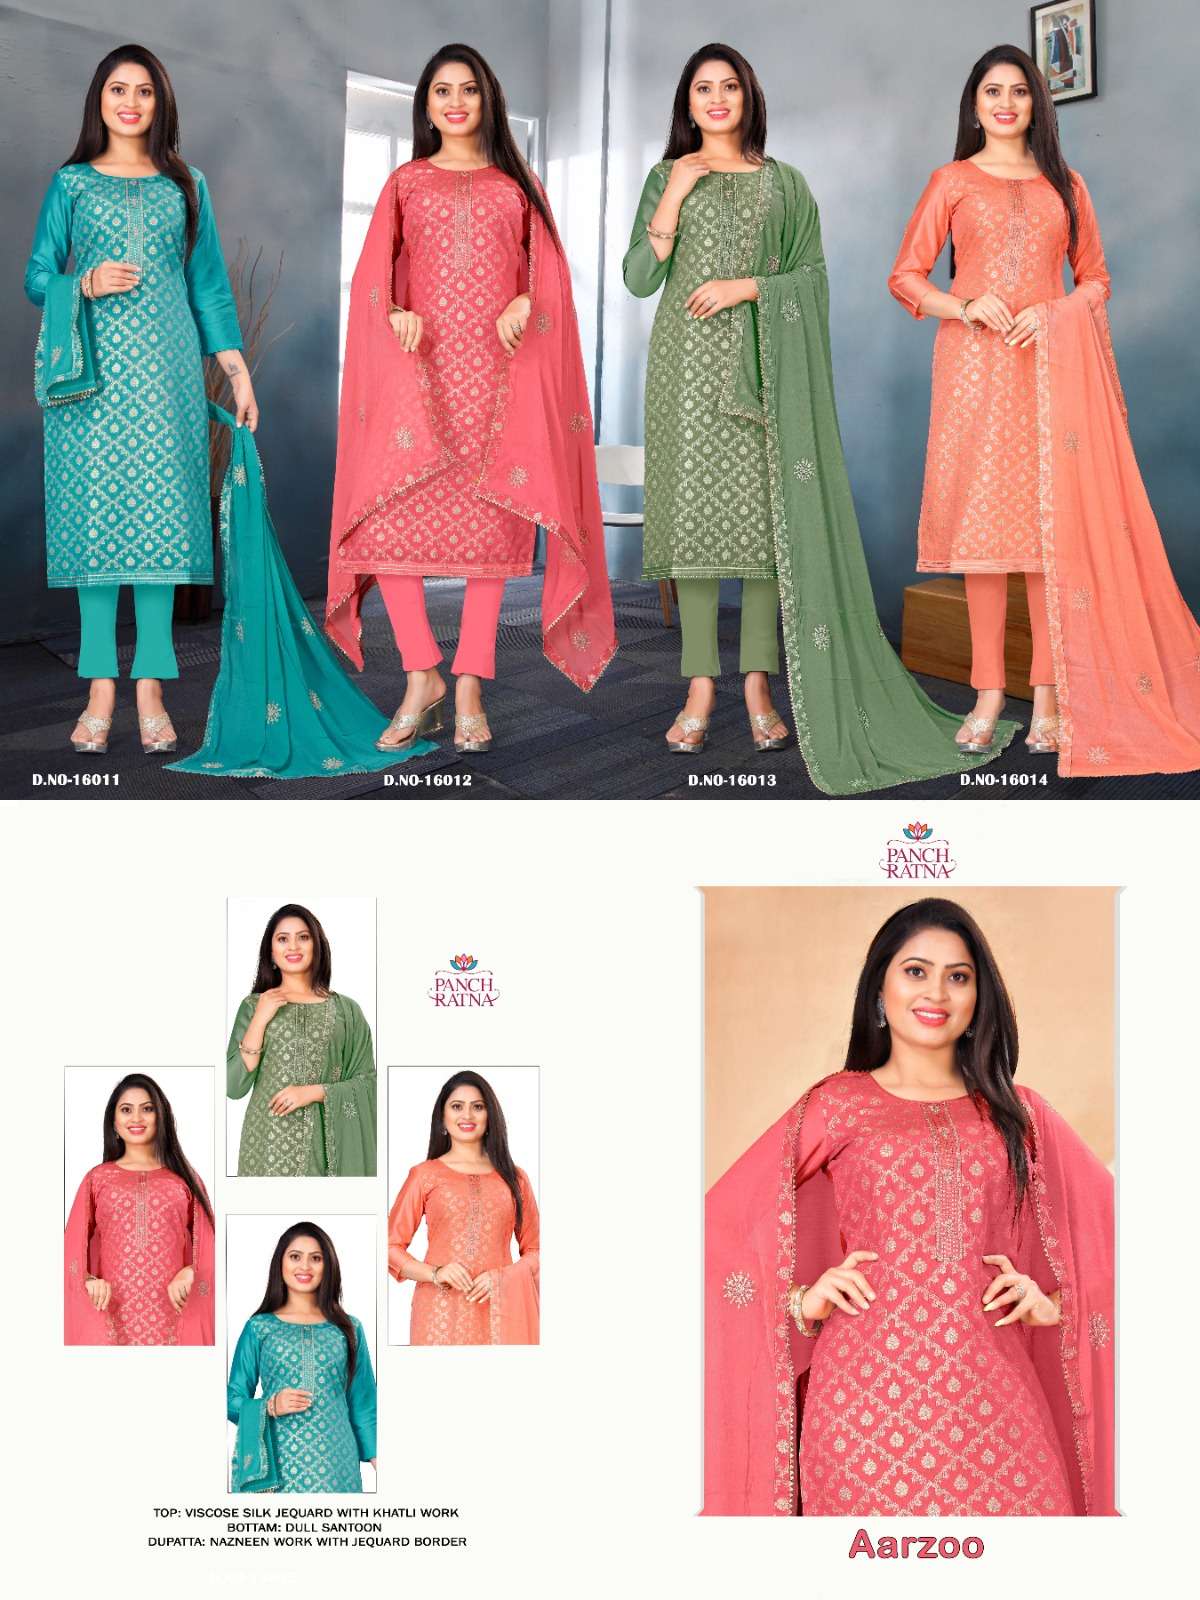 panch ratna aarzoo 16011-16014 series unstitched designer salwar kameez catalogue online dealer surat 